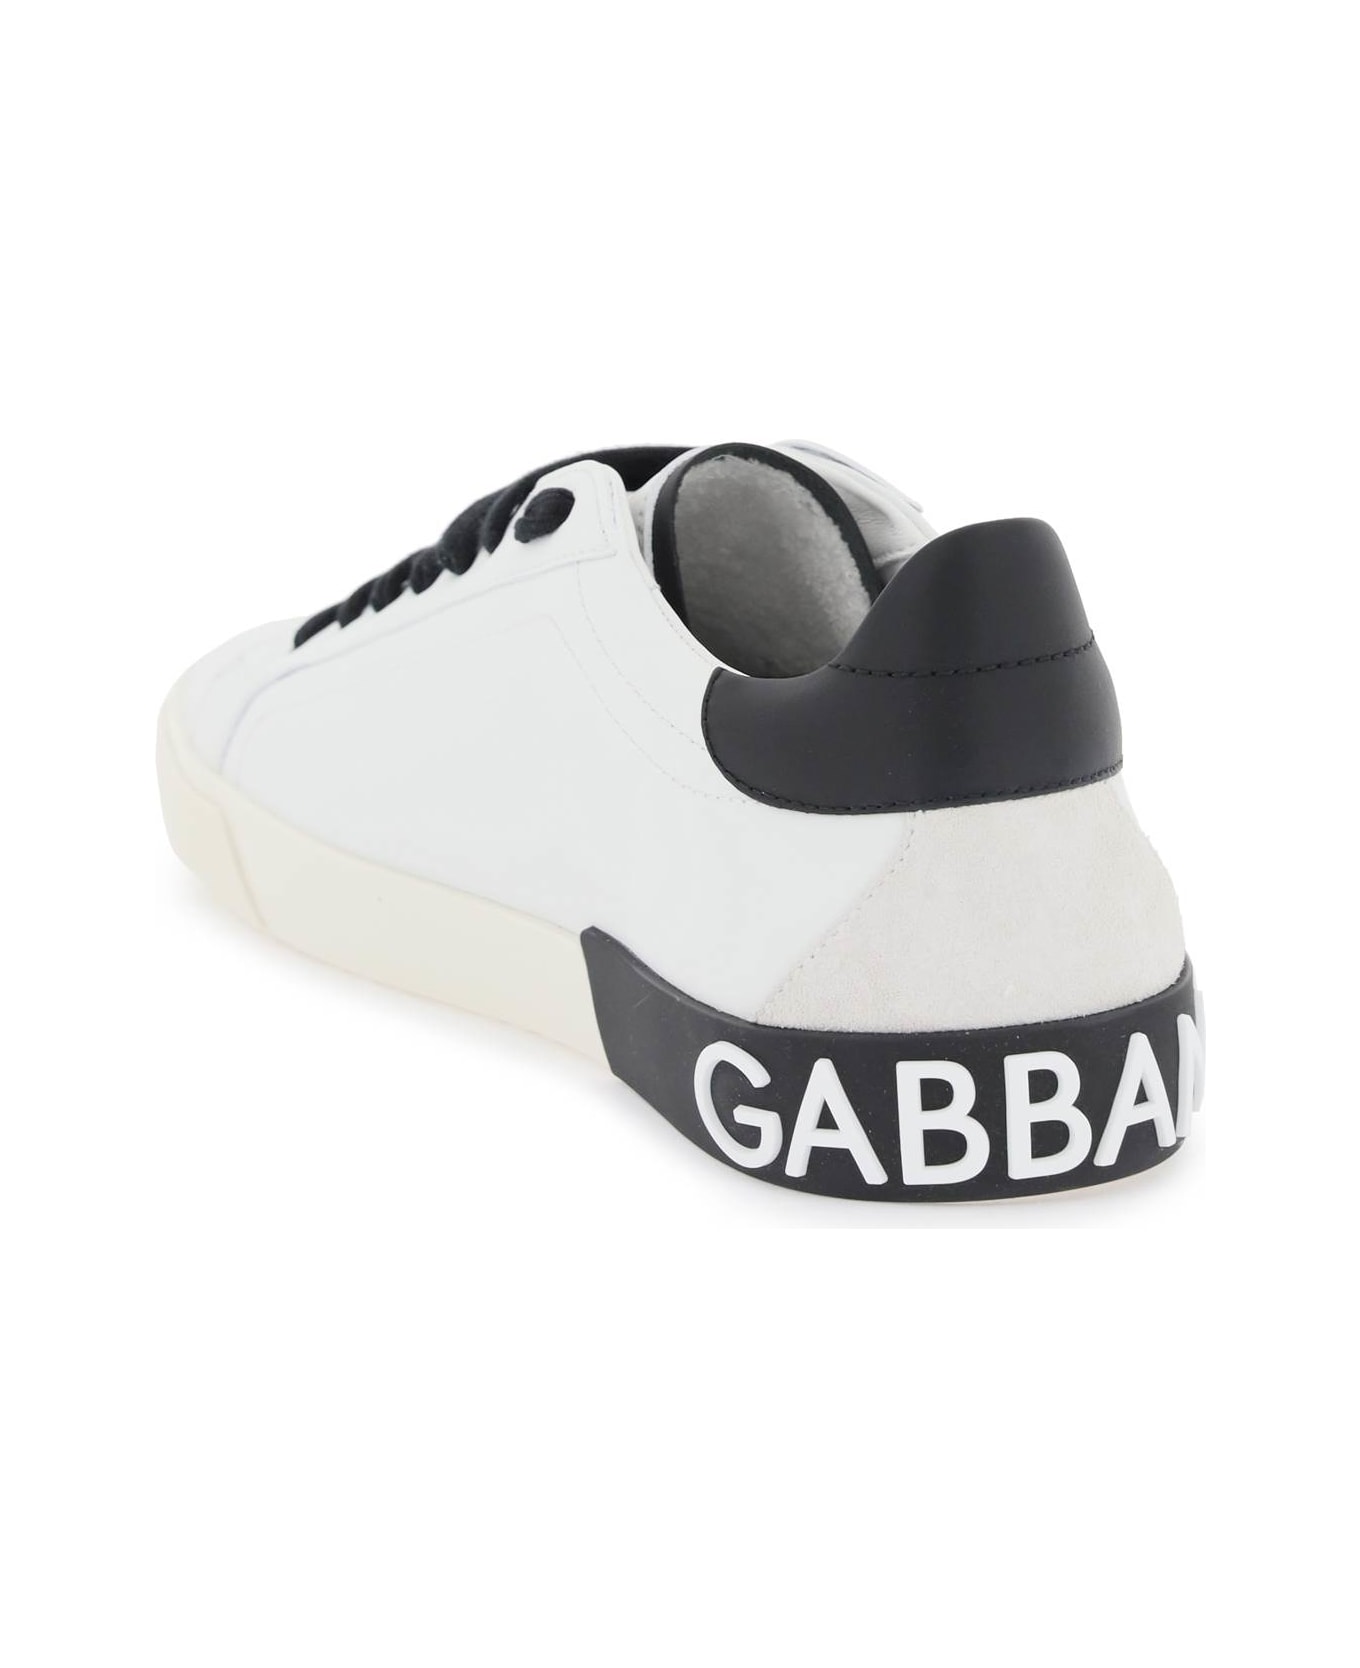 Dolce & Gabbana Portofino Nappa Leather Sneakers - WHITE/BLACK スニーカー